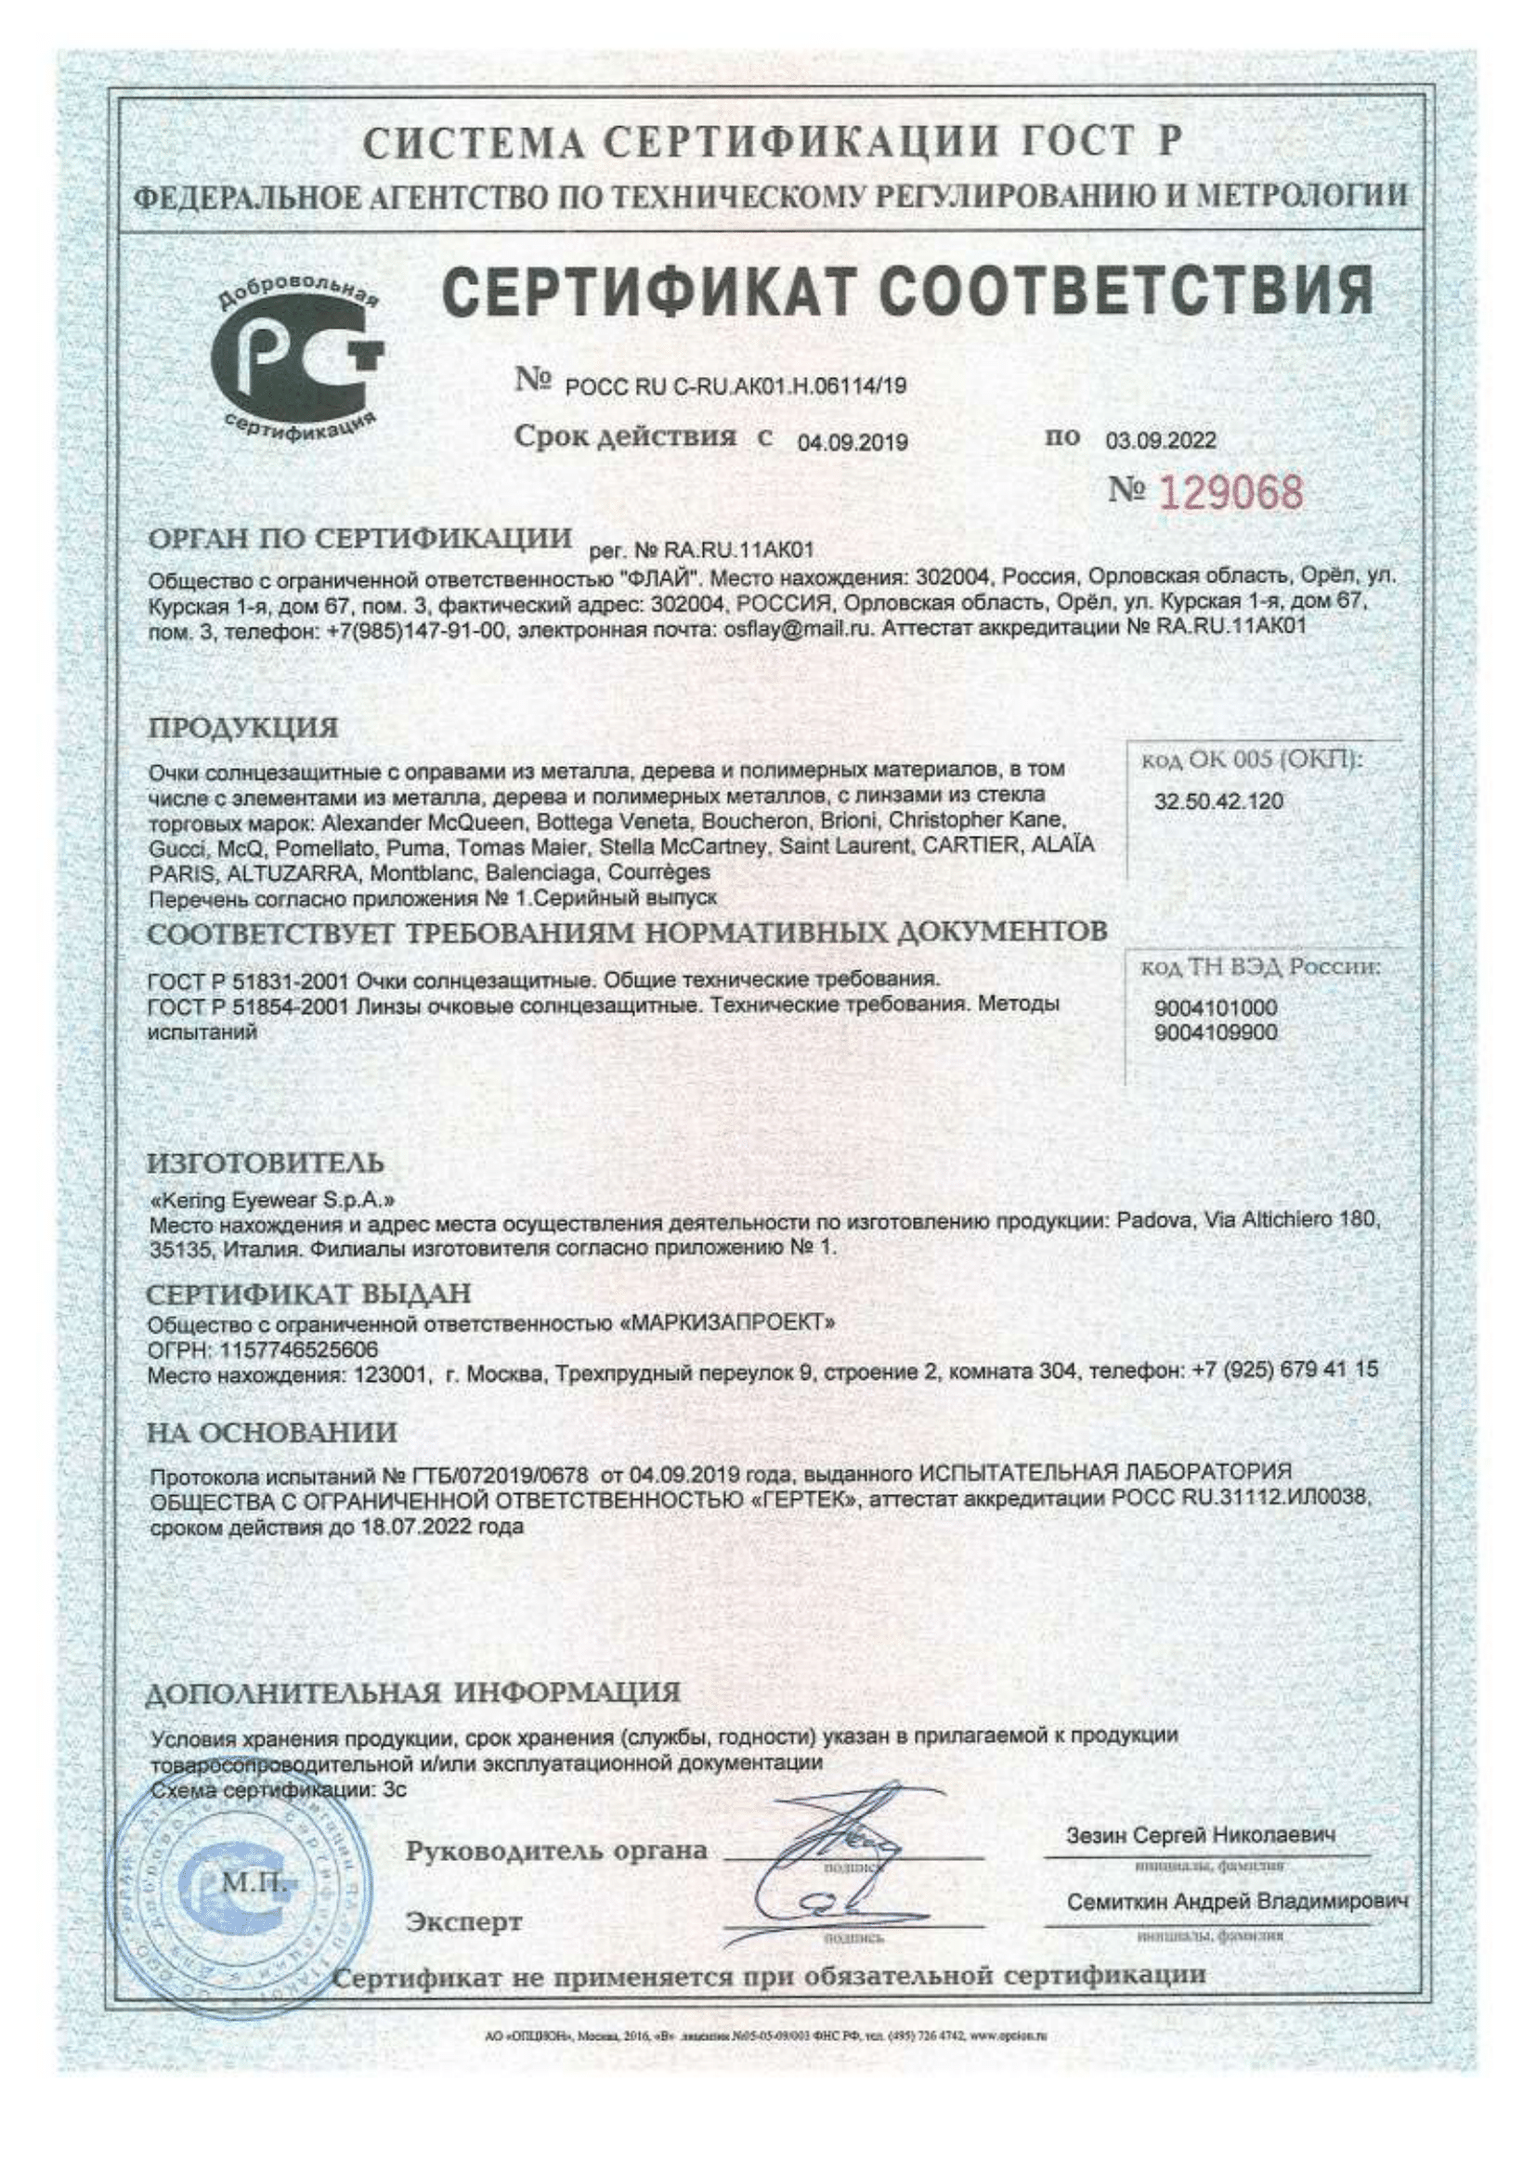 /images/certificates/sertificate4-4.png